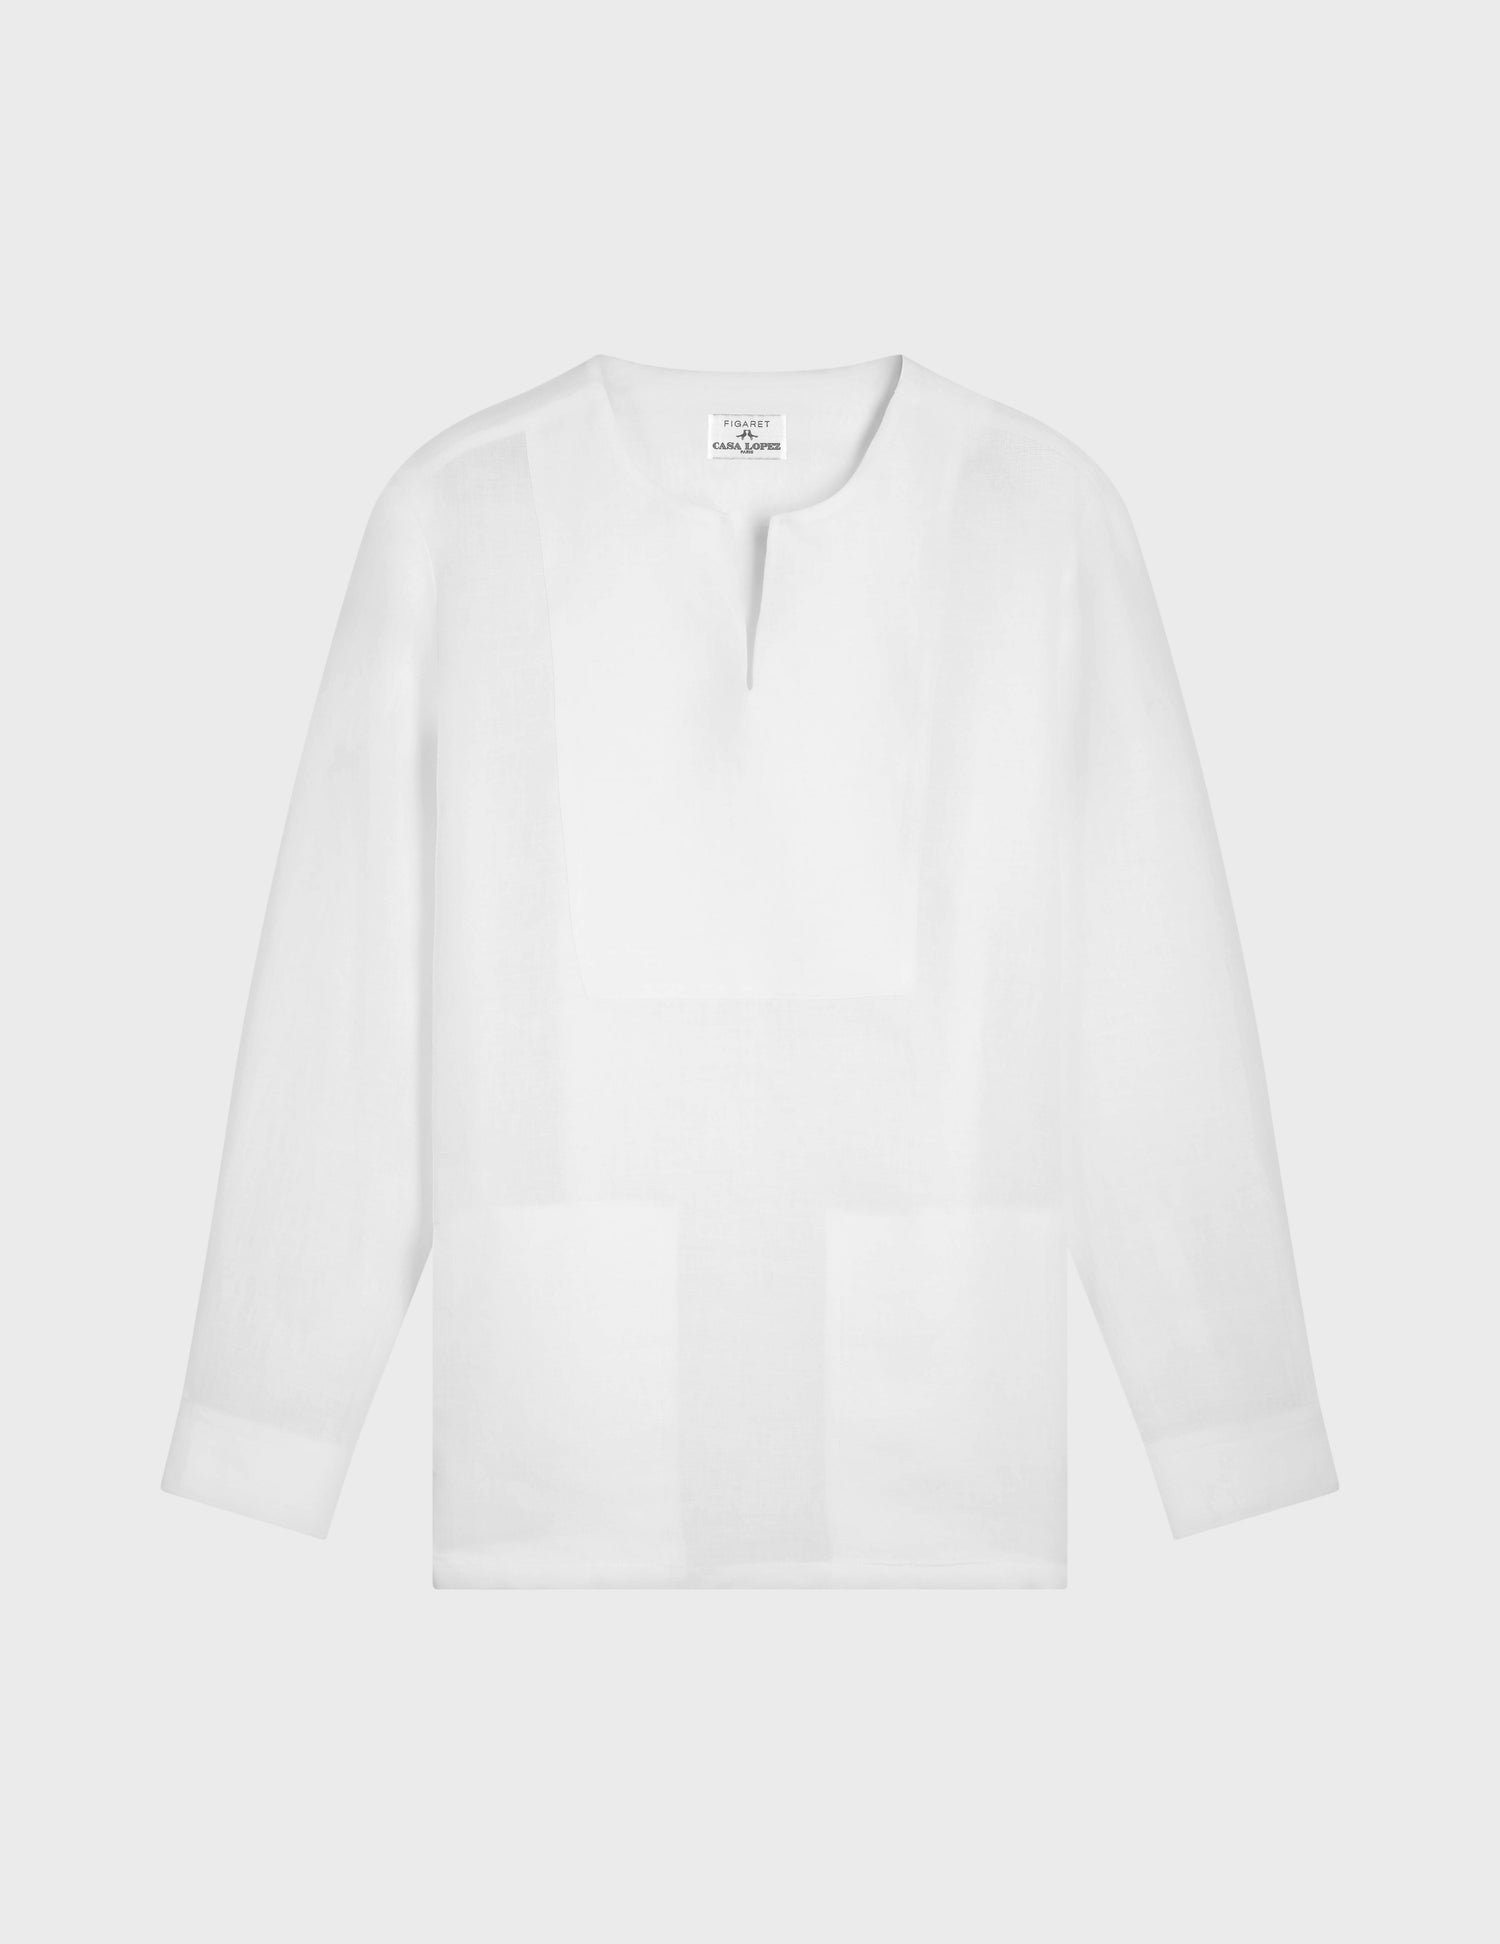 White Formentera shirt - Linen - Tunisian Collar#8